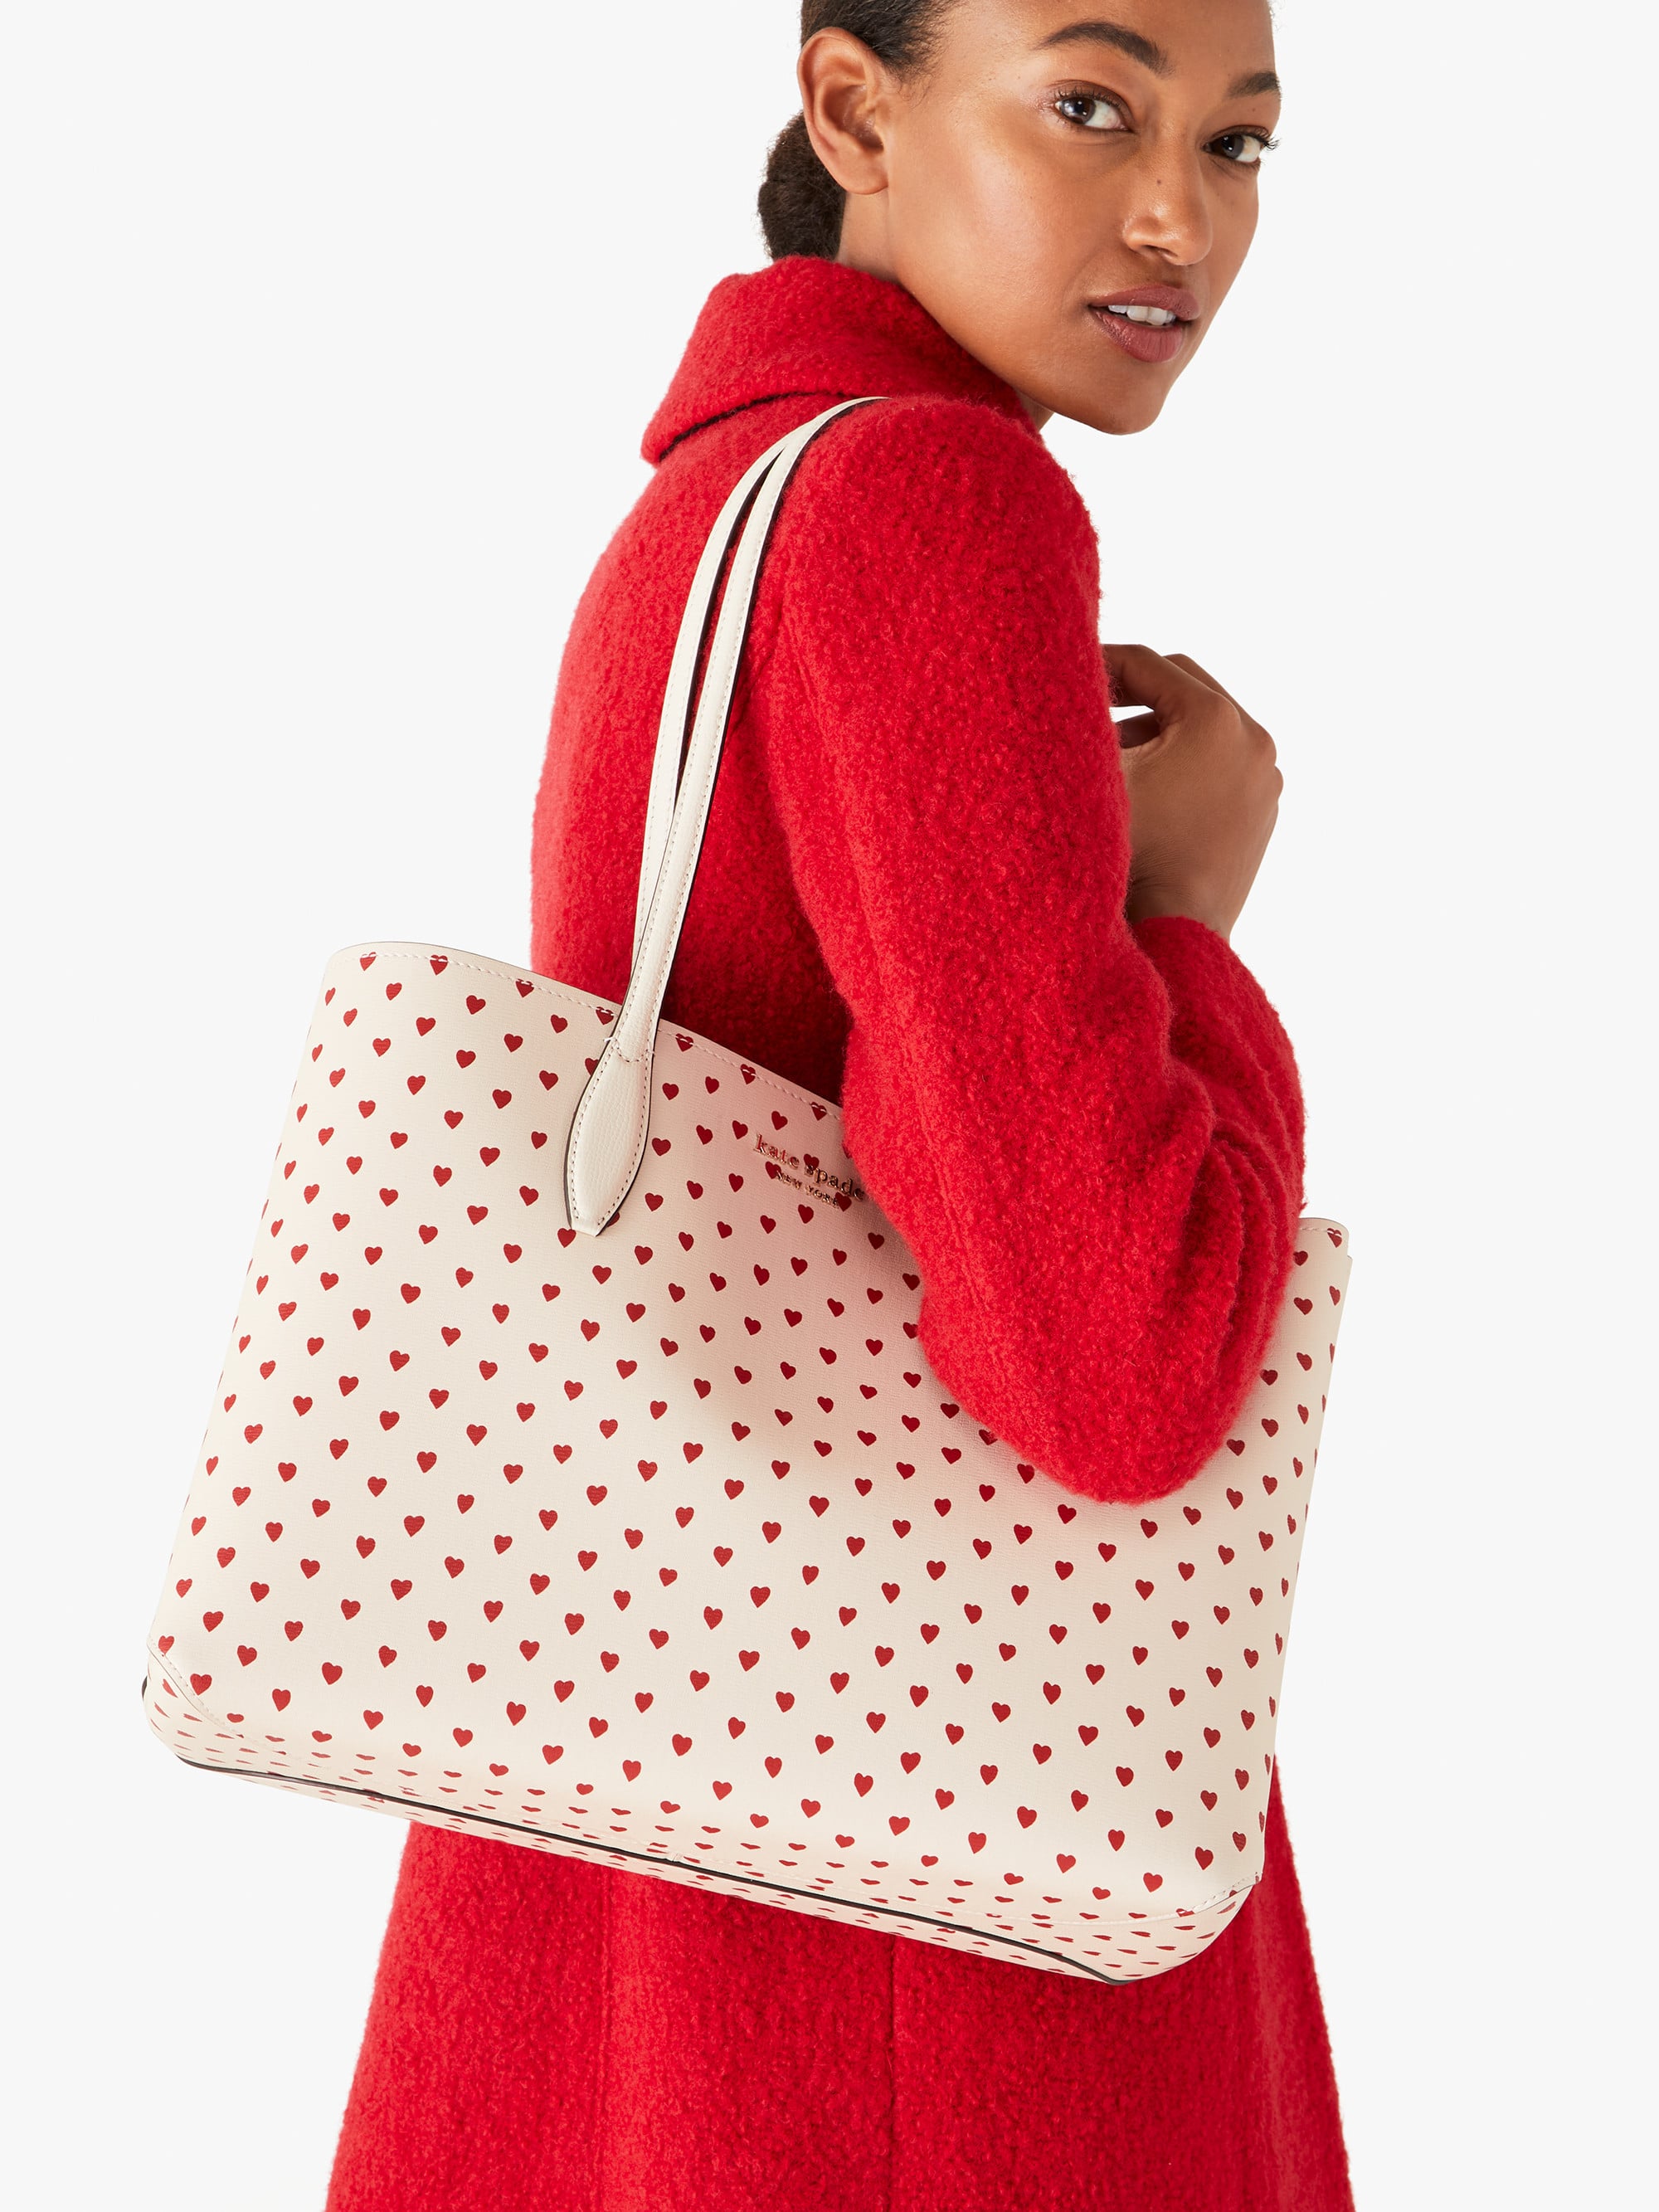 Handbags for Women Valentines Day Heart Dots Decoration Tote Shoulder Bag Satchel for Ladies Girls 